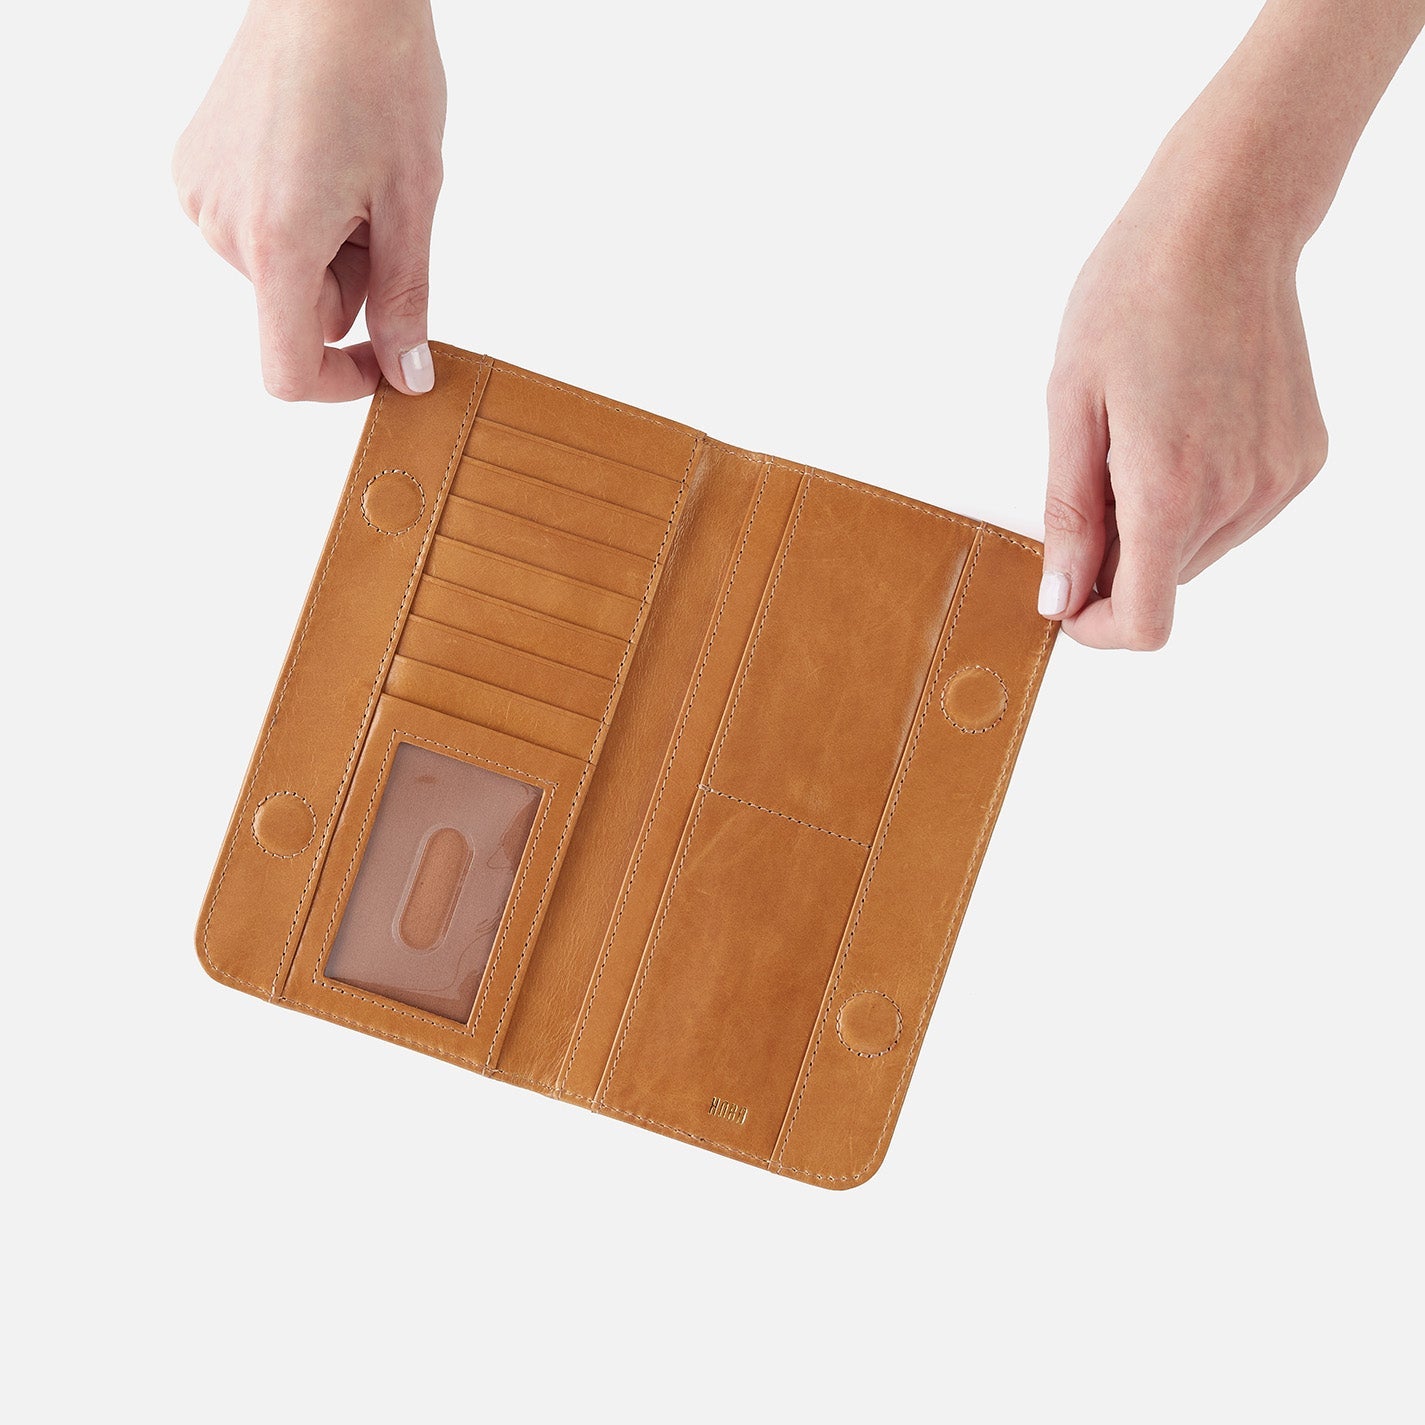 hands holding open natural wallet.